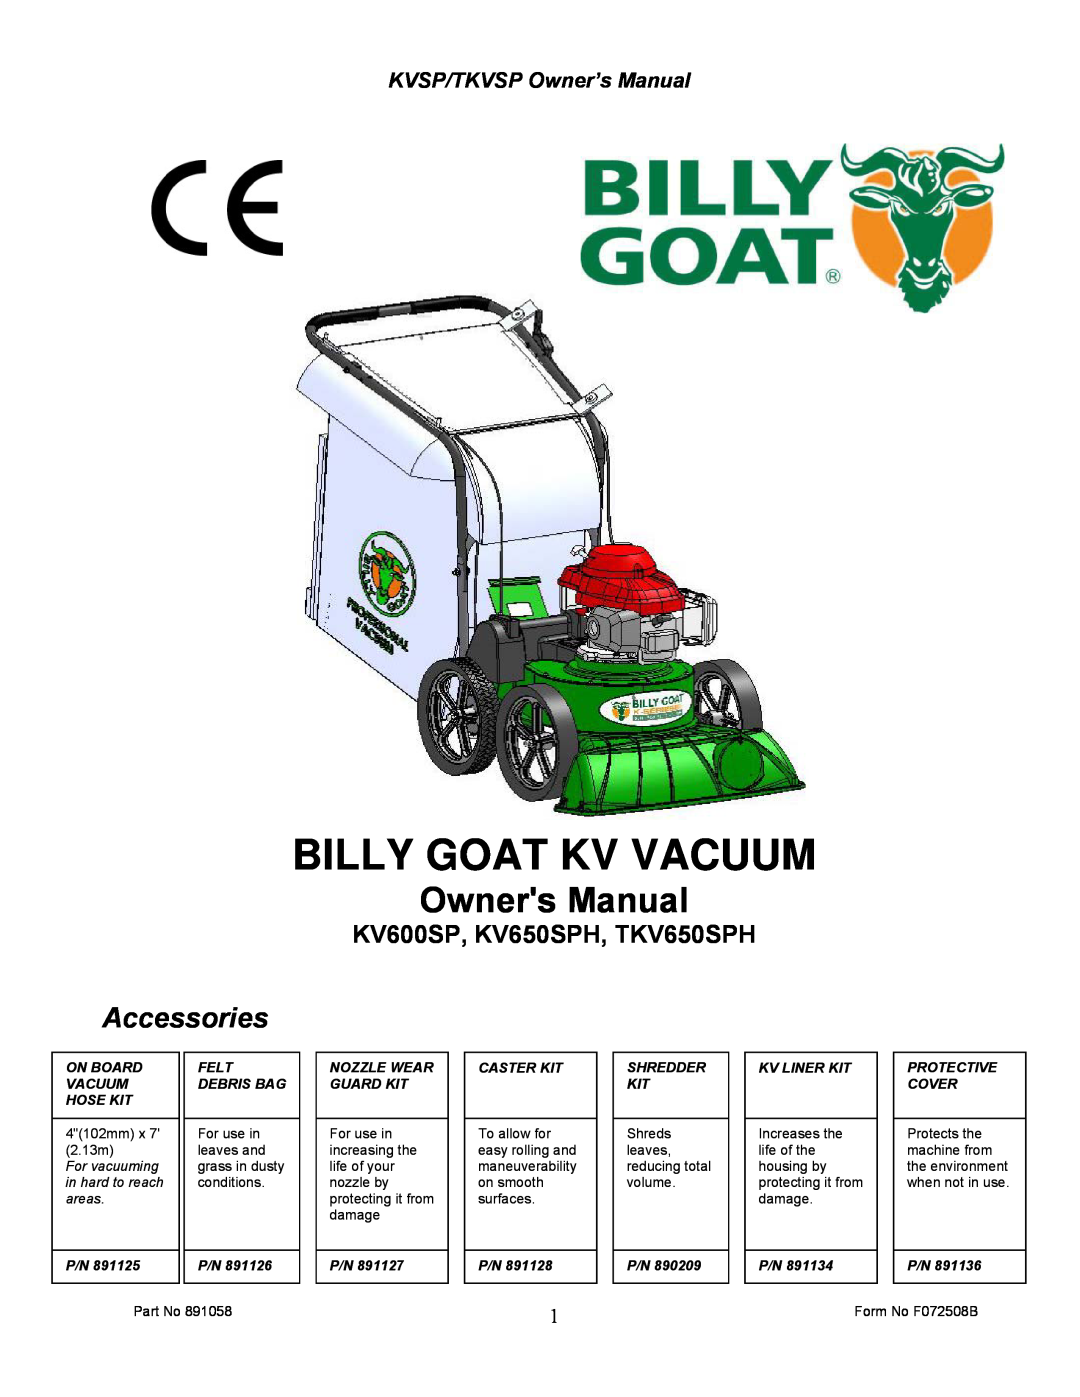 Billy Goat owner manual KV600SP, KV650SPH, TKV650SPH, Billy Goat Kv Vacuum, Accessories 